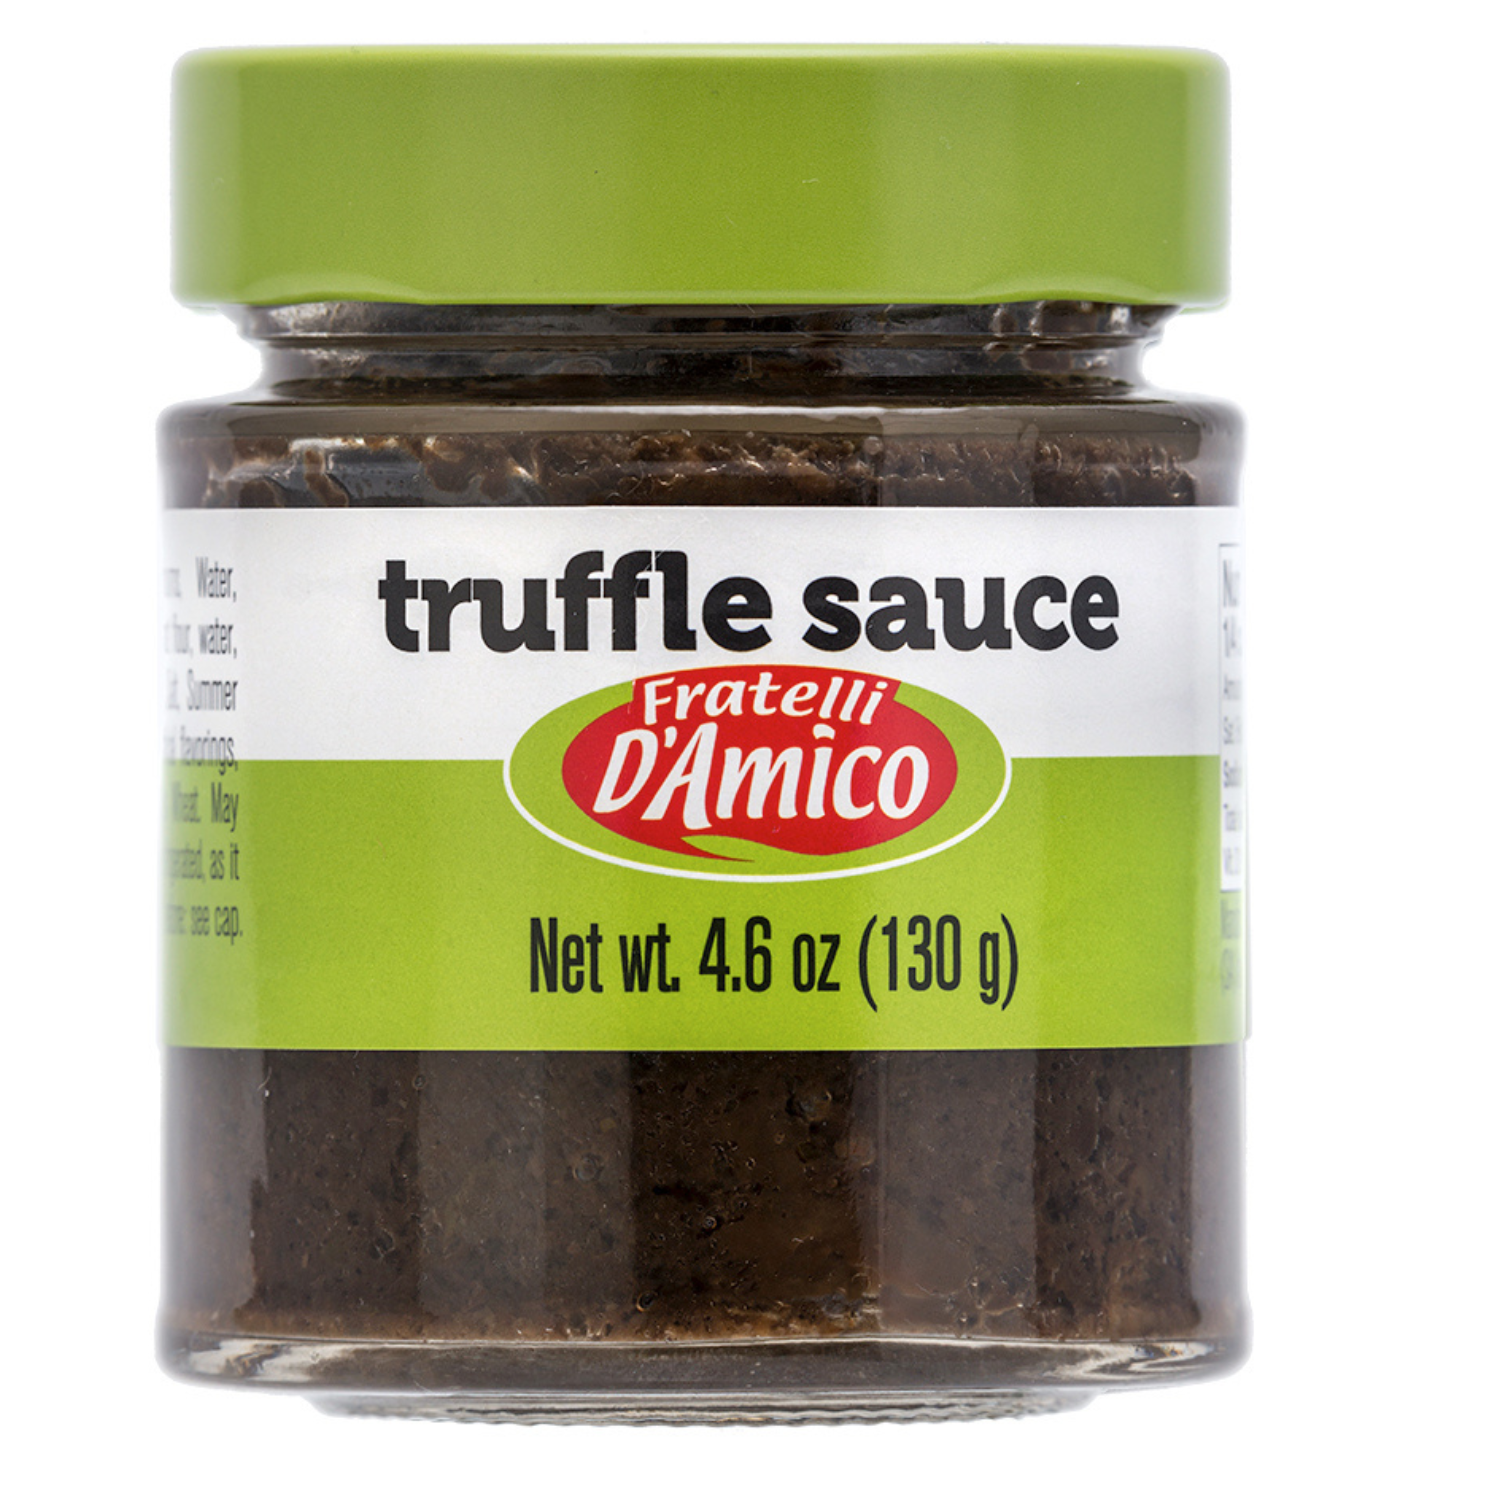 Fratelli D'Amico, Truffle Sauce, Tartufata, Pate', 4.06 oz, Black Truffle Paste, Dip, Spread, Truff Sauce, Product of Italy